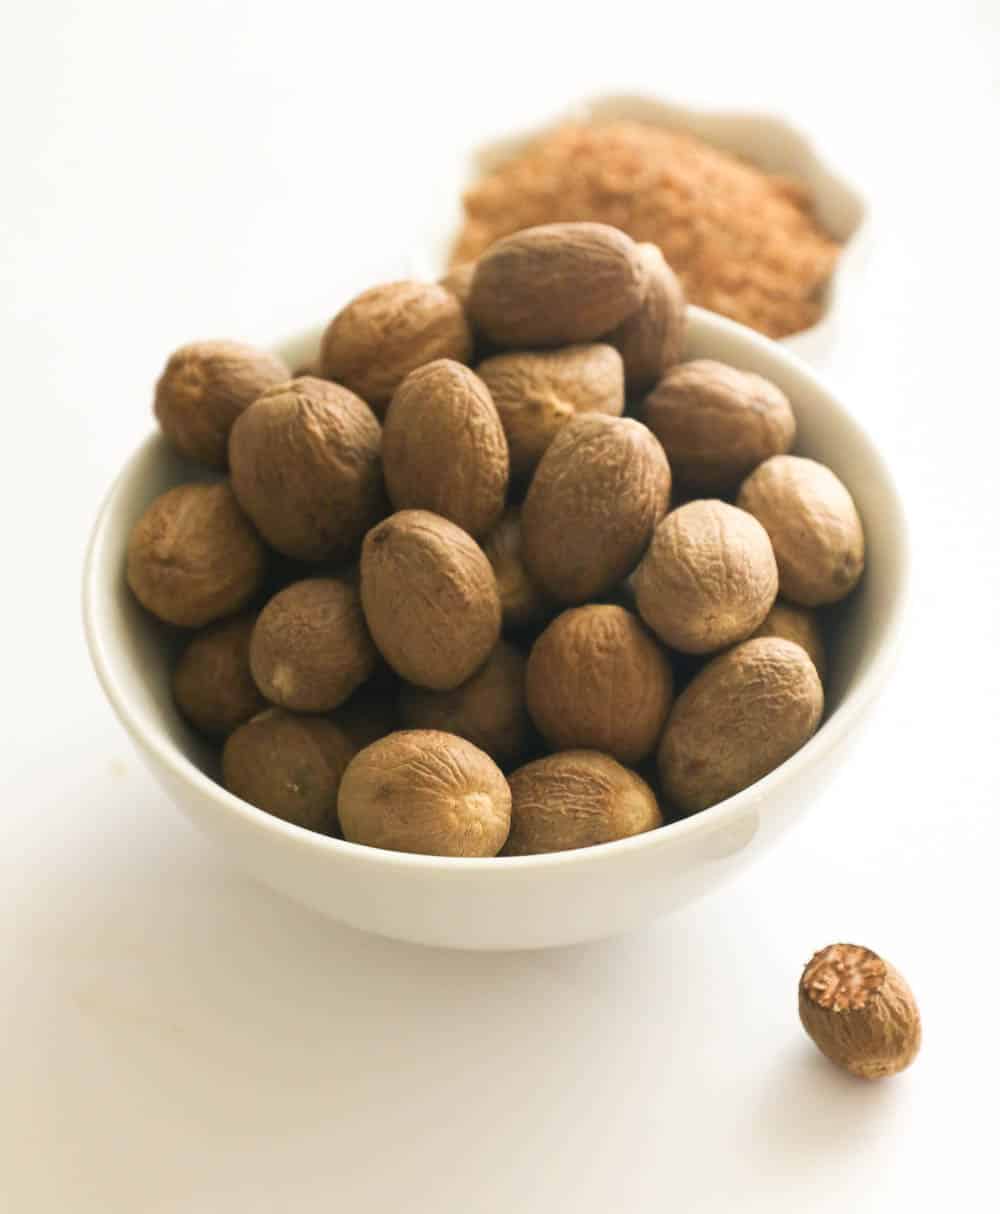 A bowl of whole nutmeg